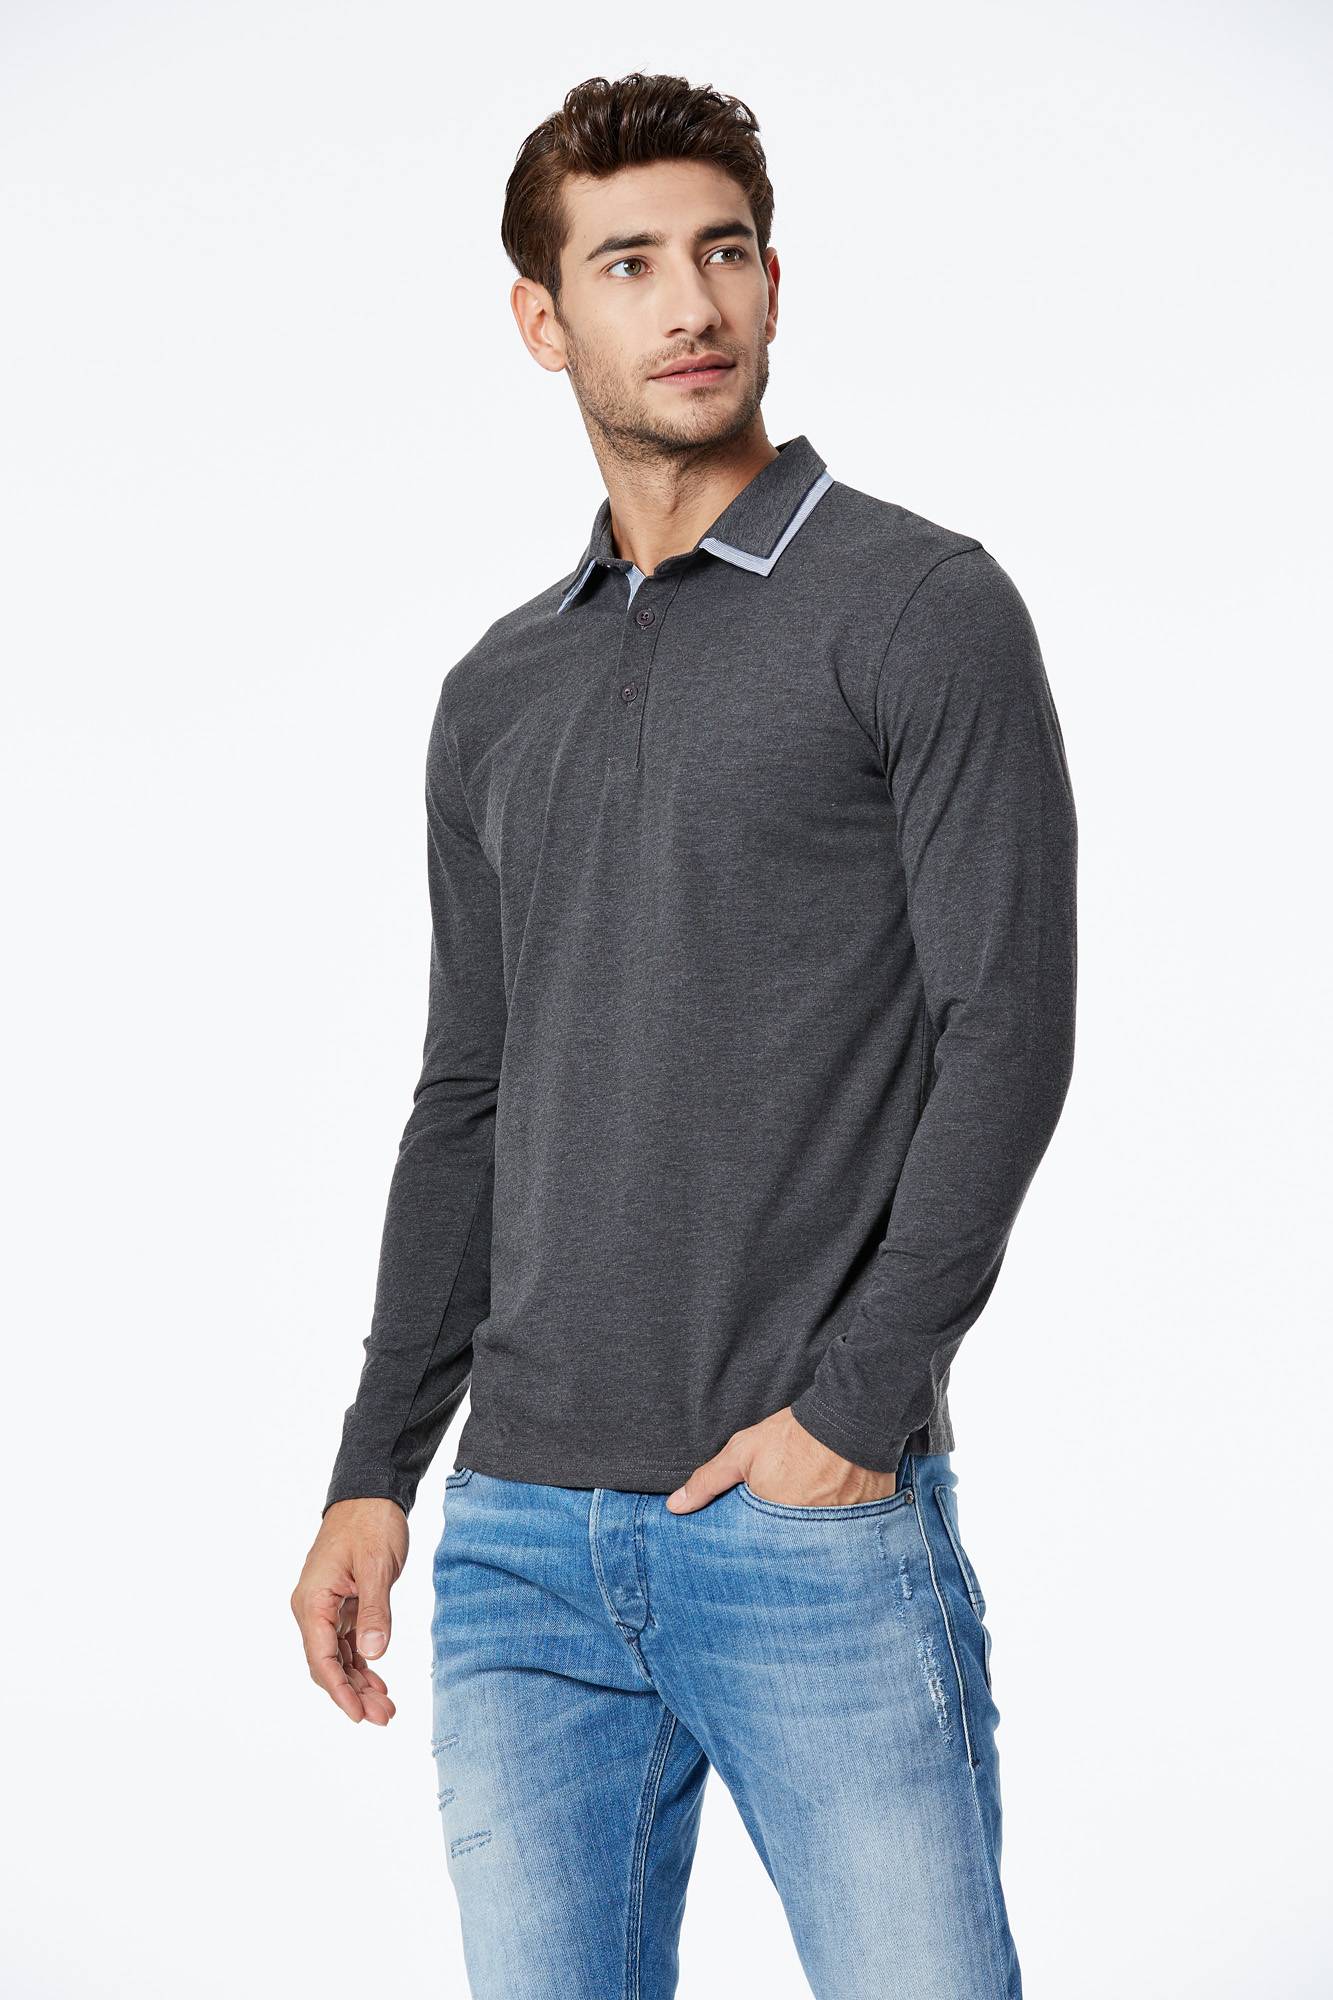 Men's Knitted Long Sleeve T-Shirt